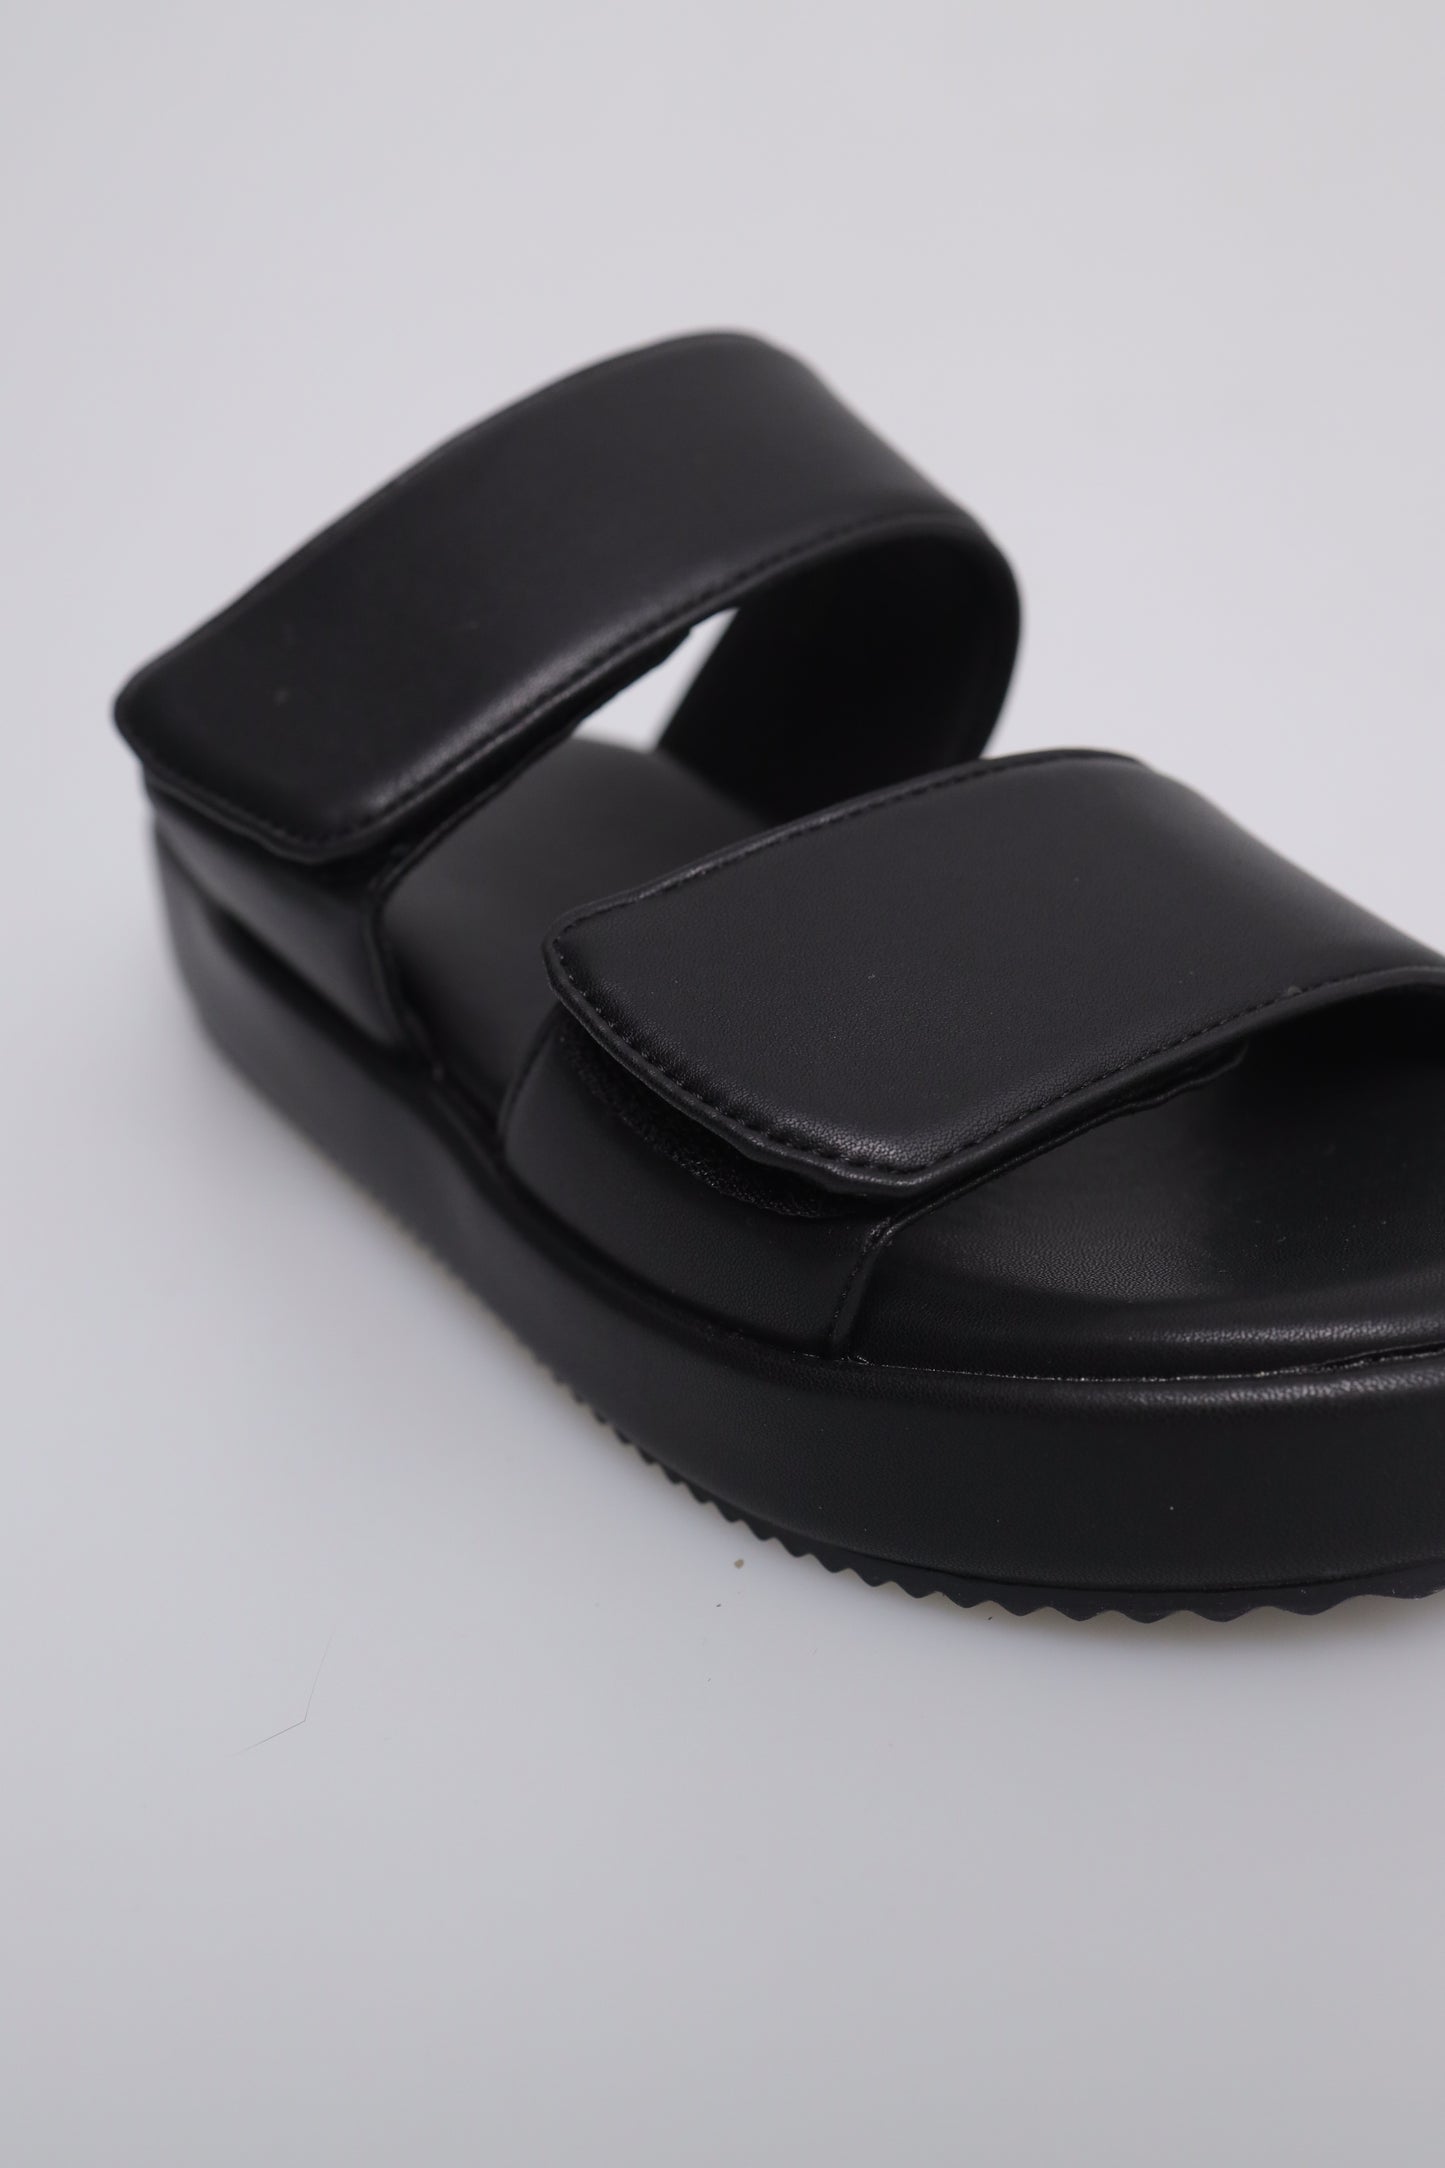 Tomaz FL059 Ladies Slide On Sandals (Black)